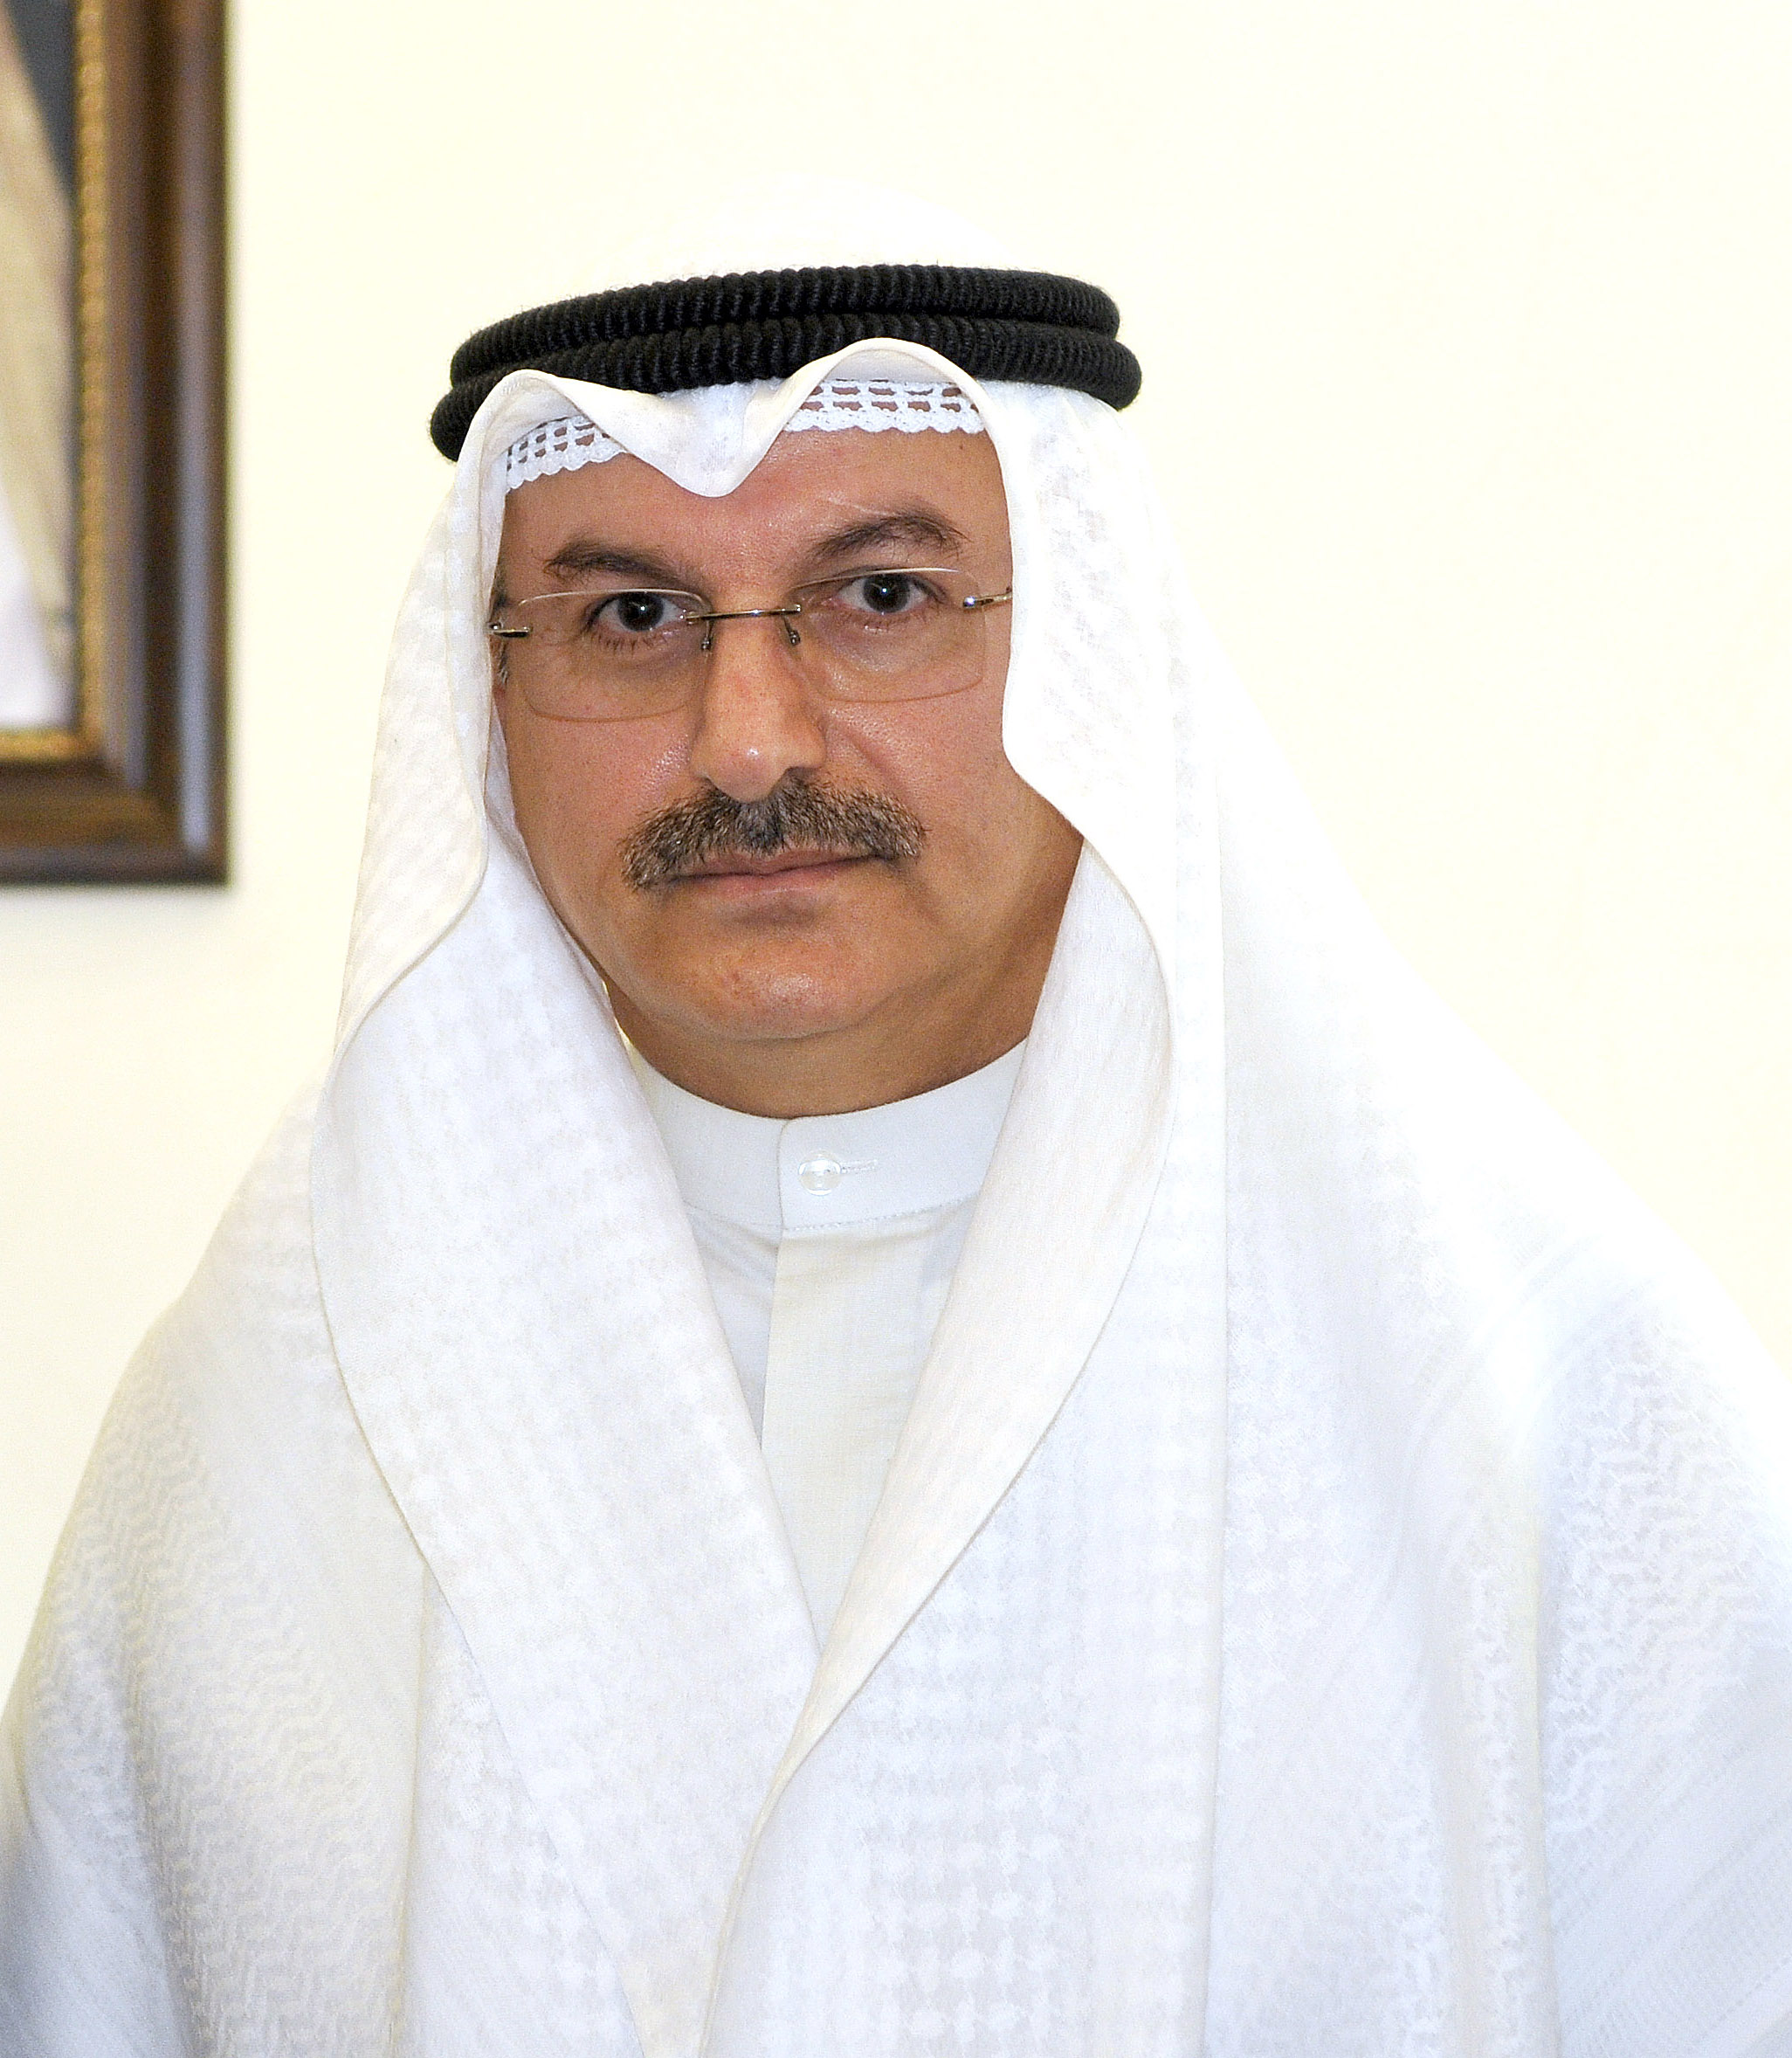 Kuwait's ambassador to Lebanon Abdelaal Al-Qenaei